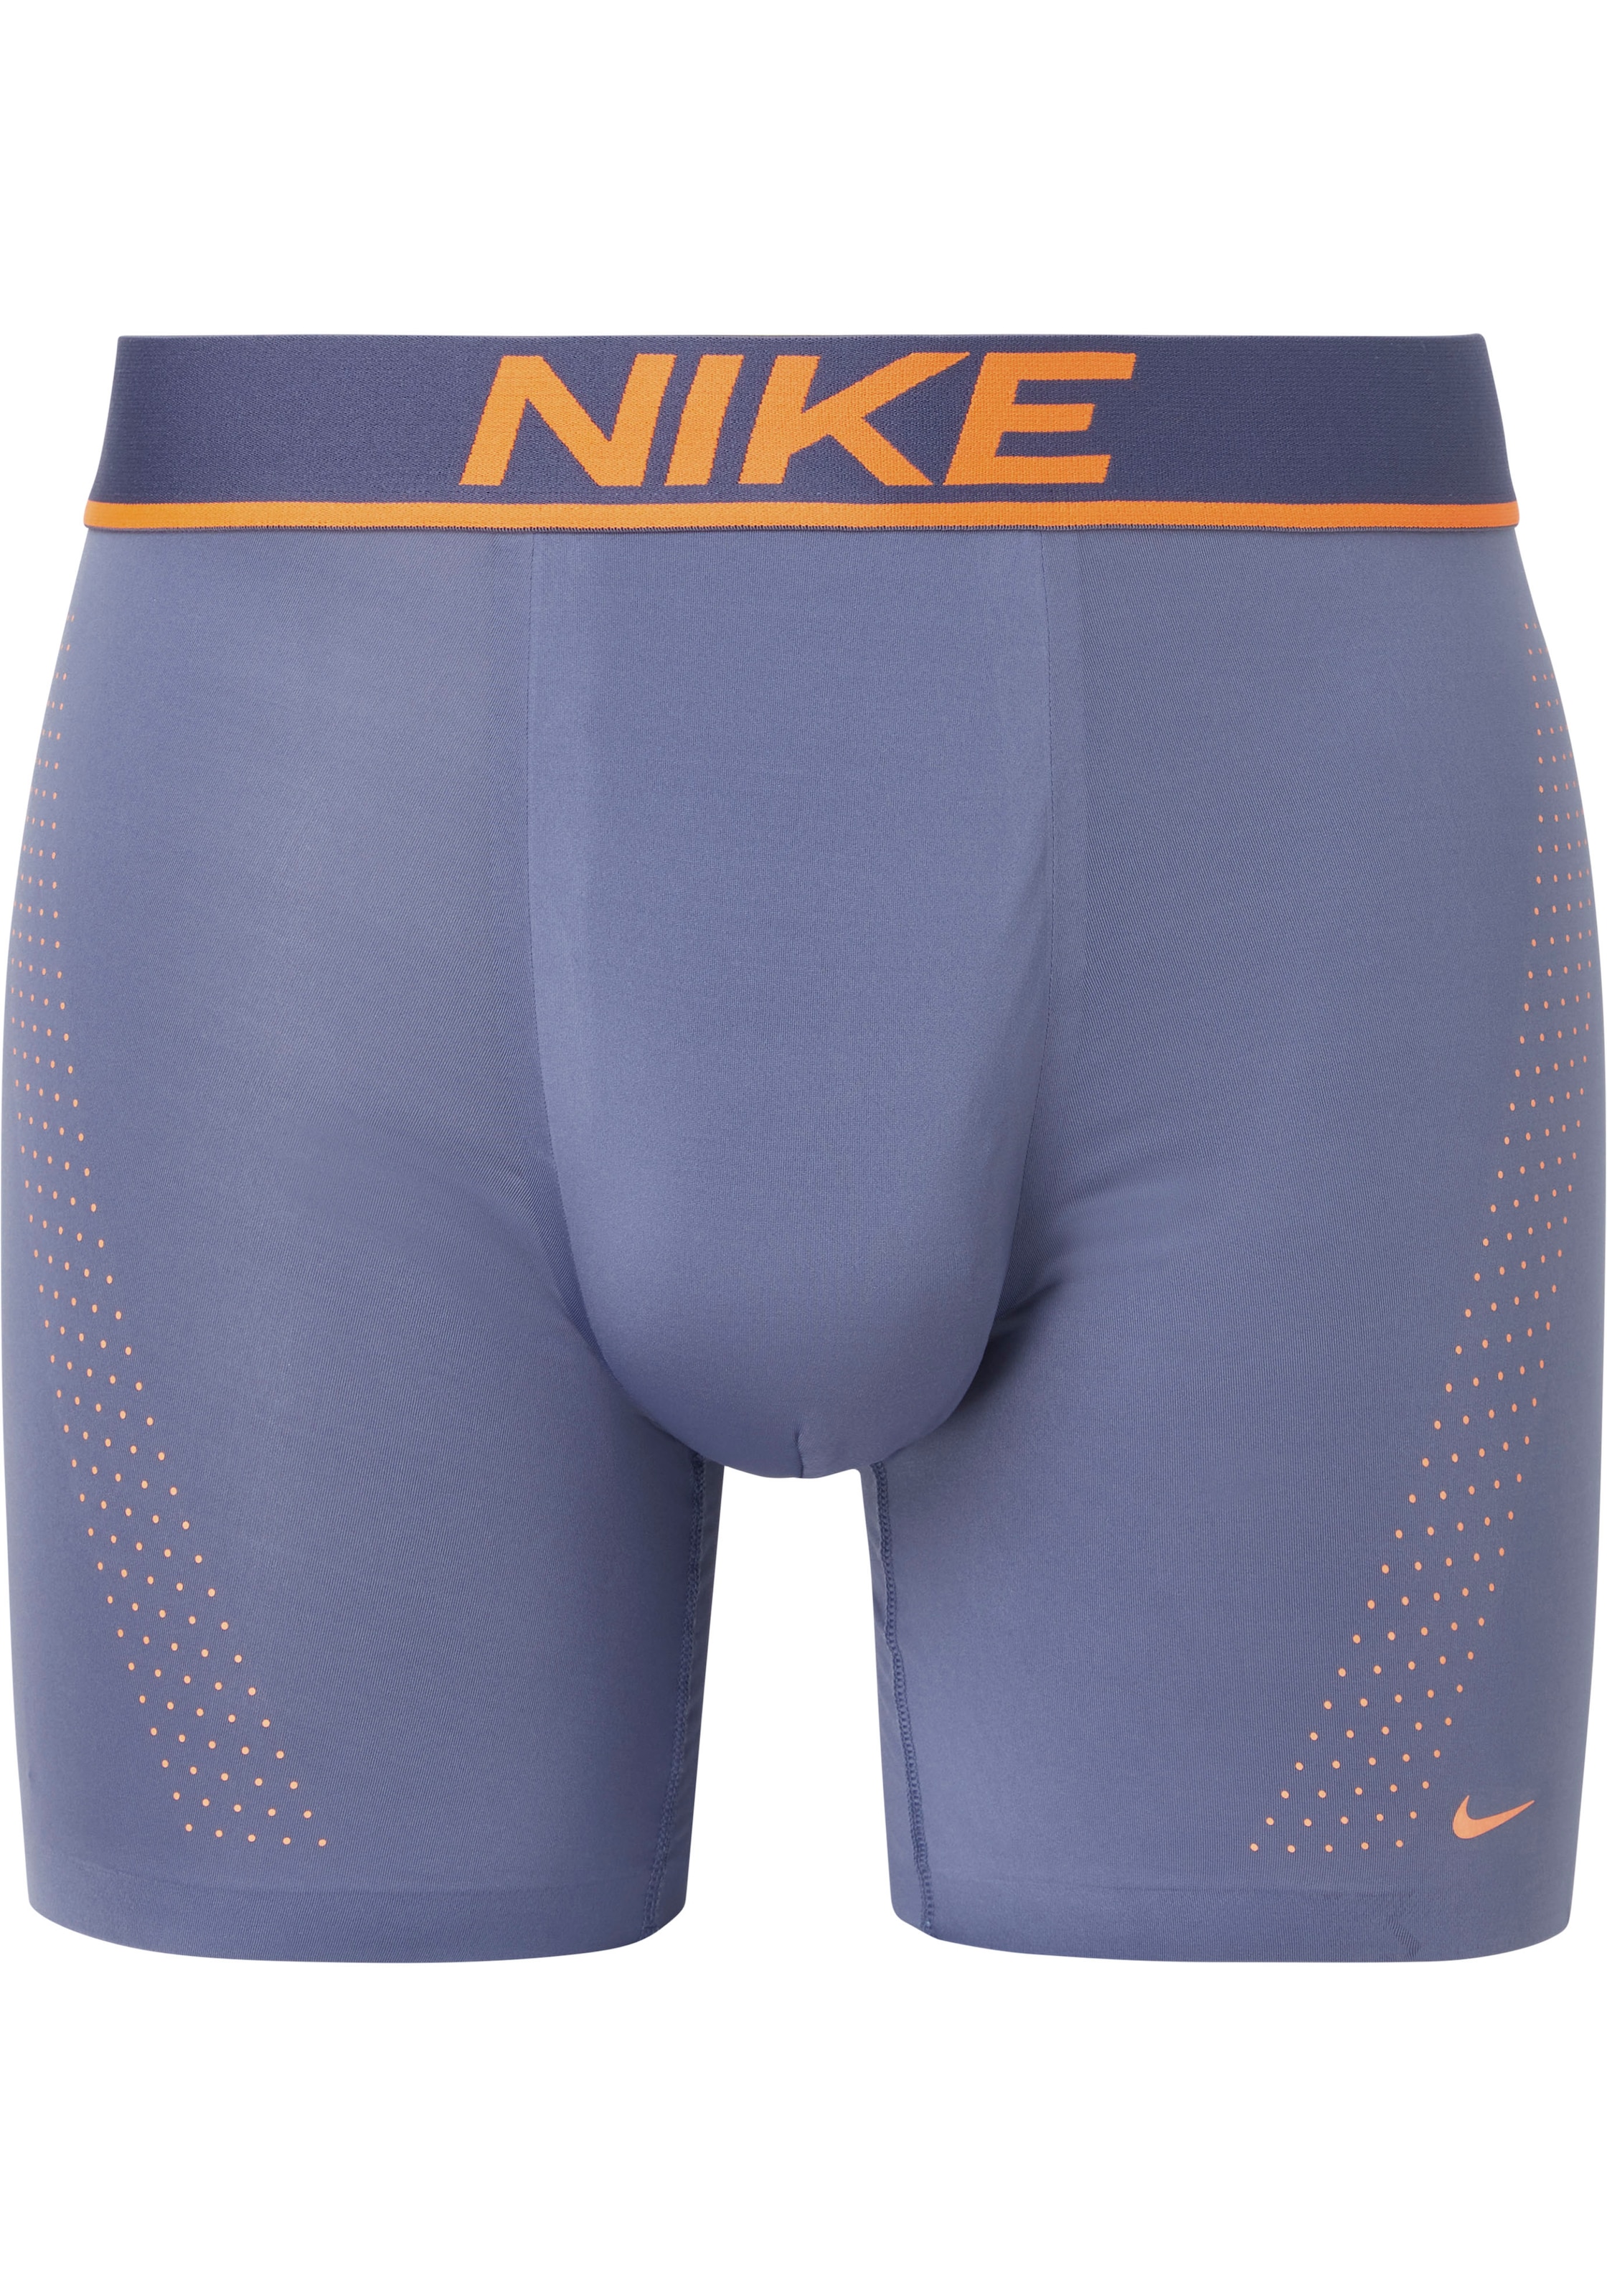 Nike Underwear Kelnaitės šortukai »BOXER BRIEF« su Ni...